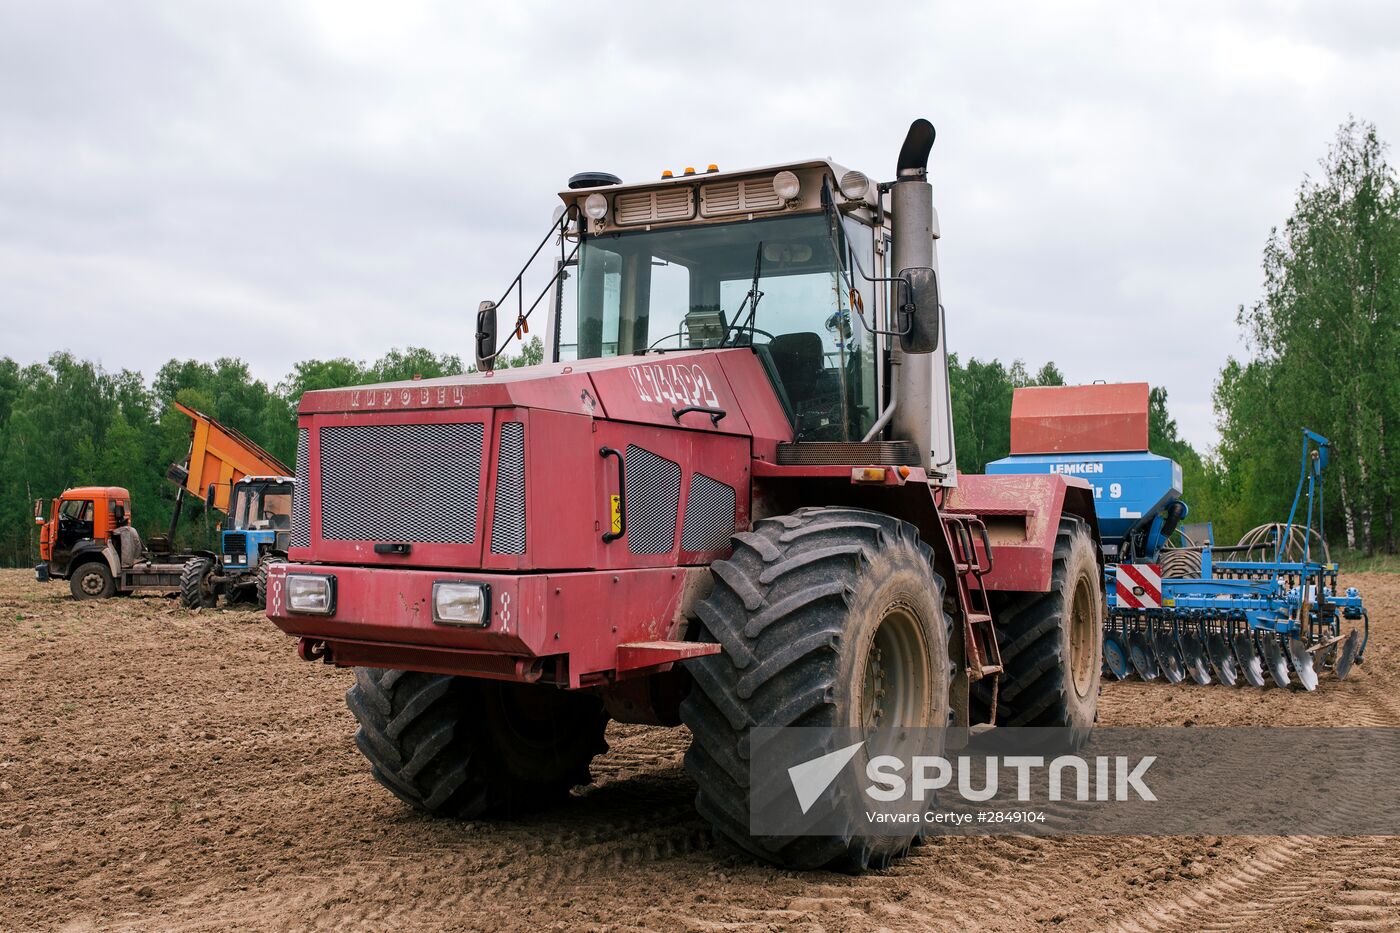 Sowing season in Ivanovo region